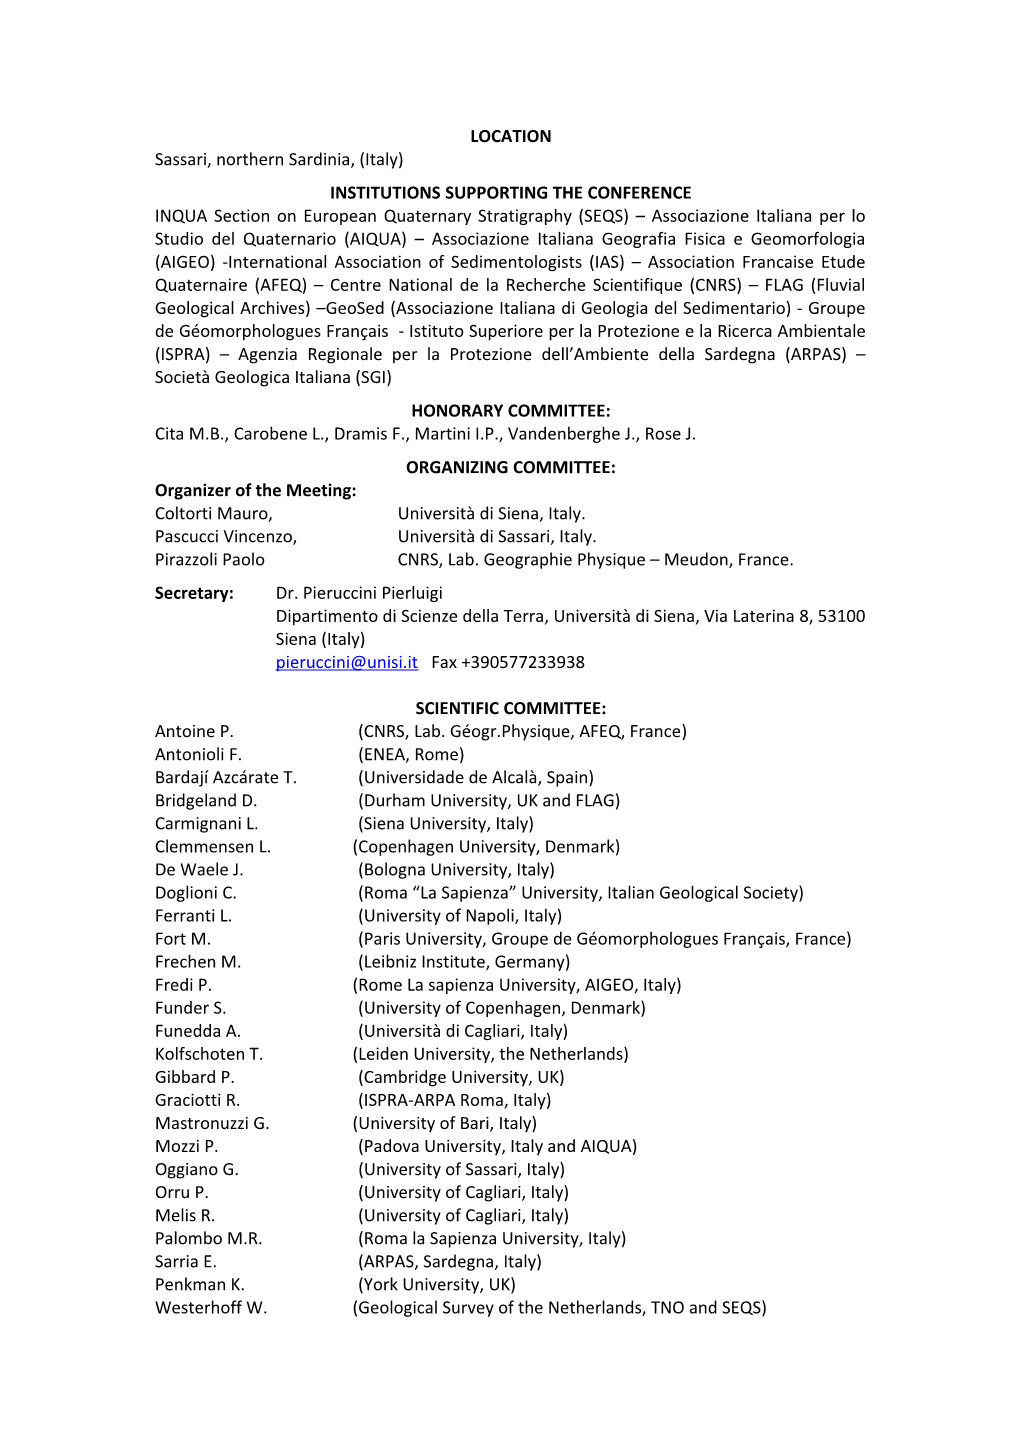 Inqua Section on European Quaternary Stratigraphy (Seqs)